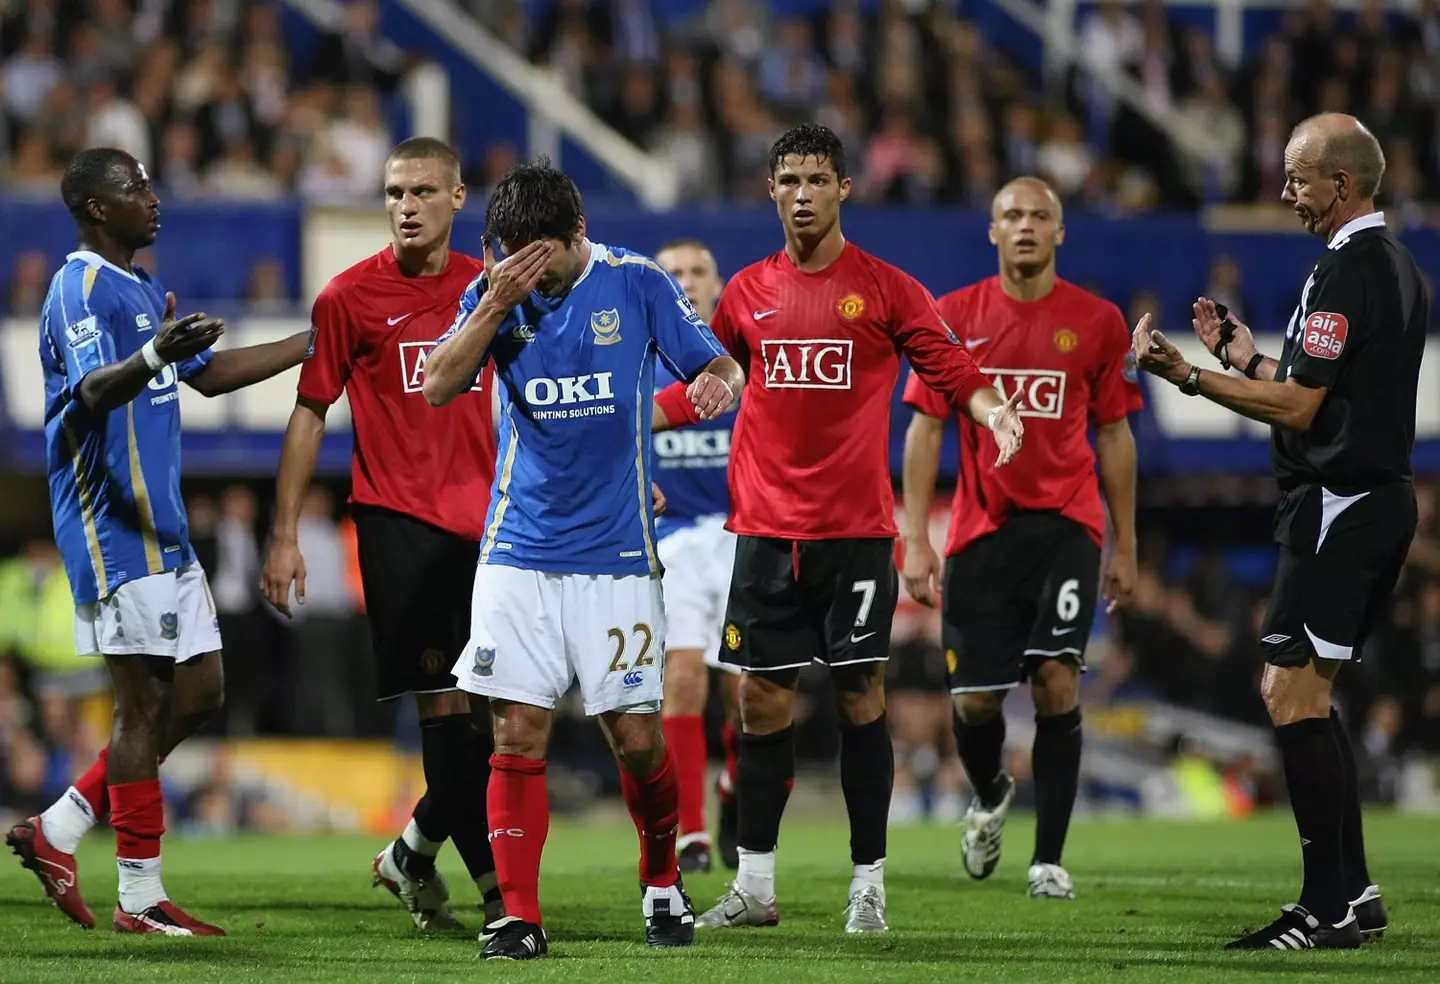 Ronaldo was sent off for headbutting Hughes (credit: Getty)